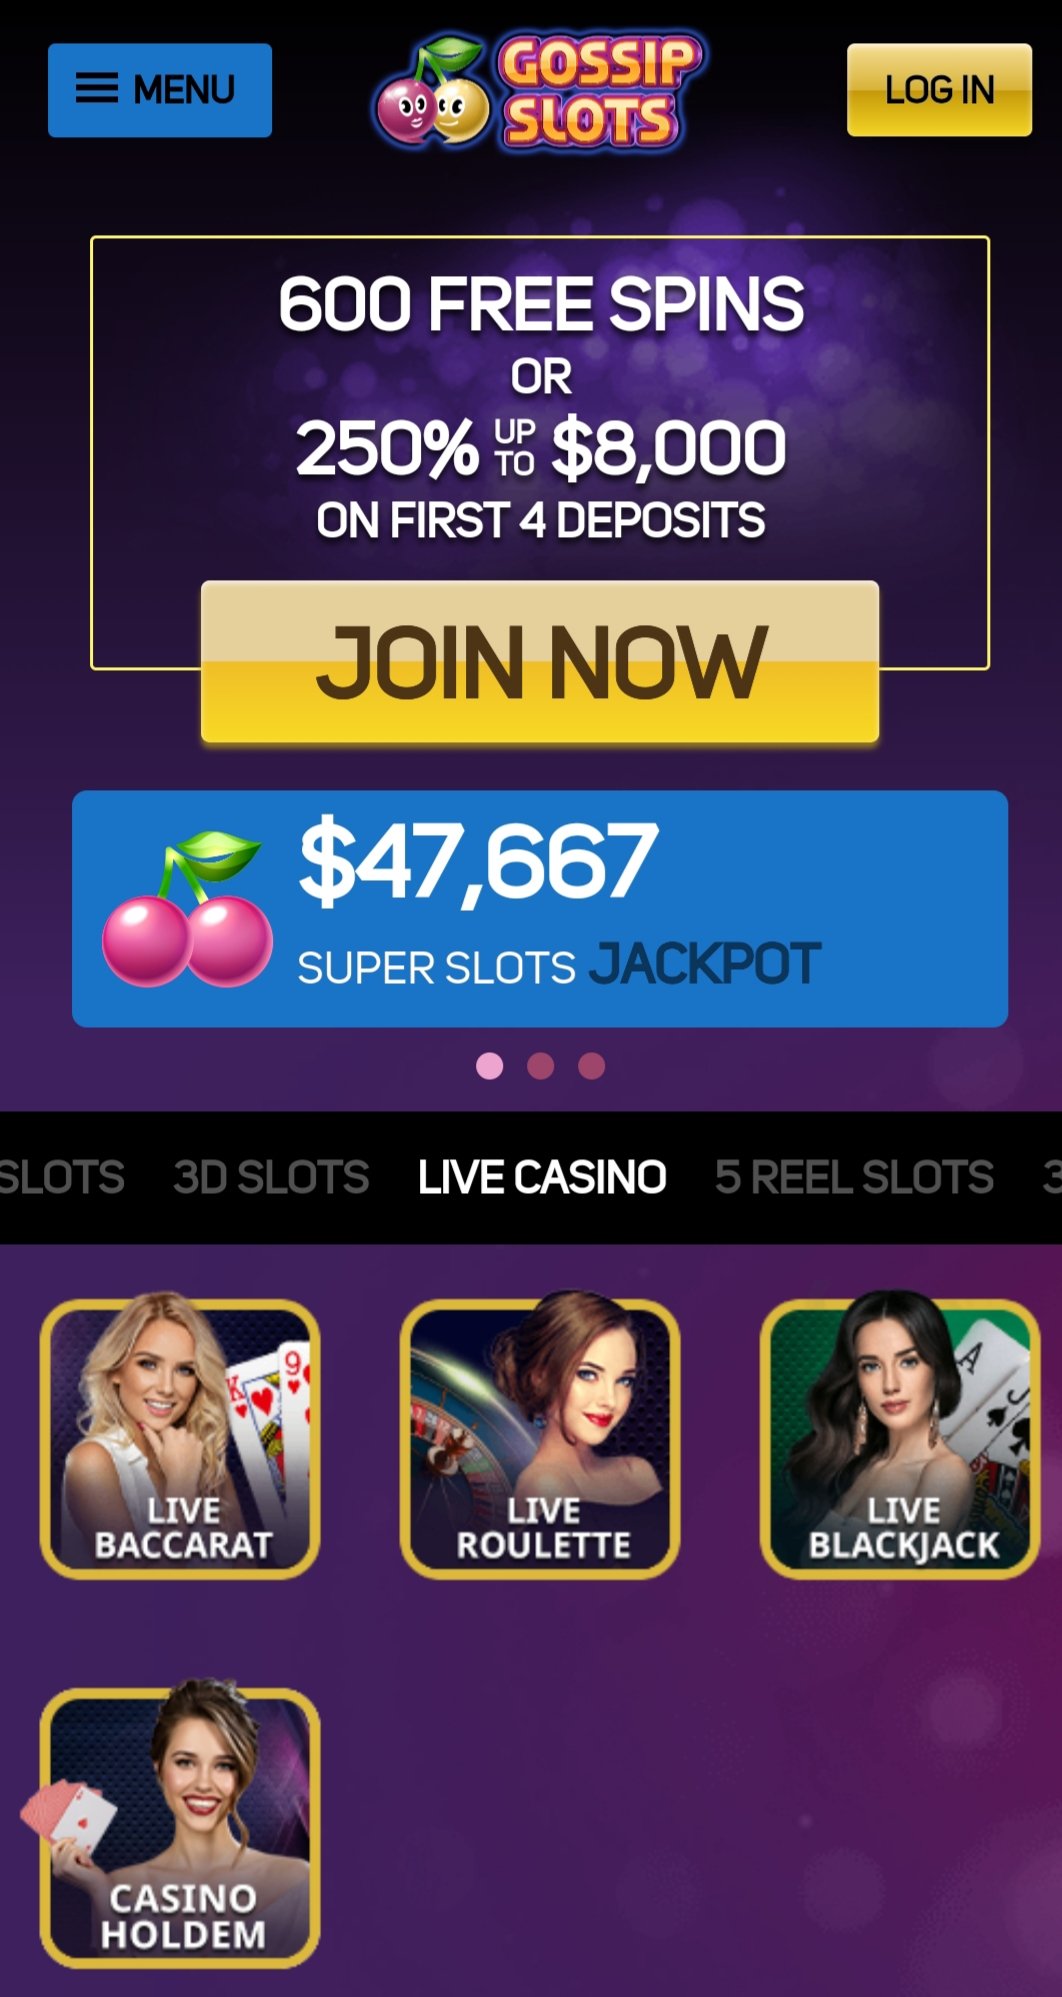 Gossip Slots Casino Mobile Live Dealer Games Review